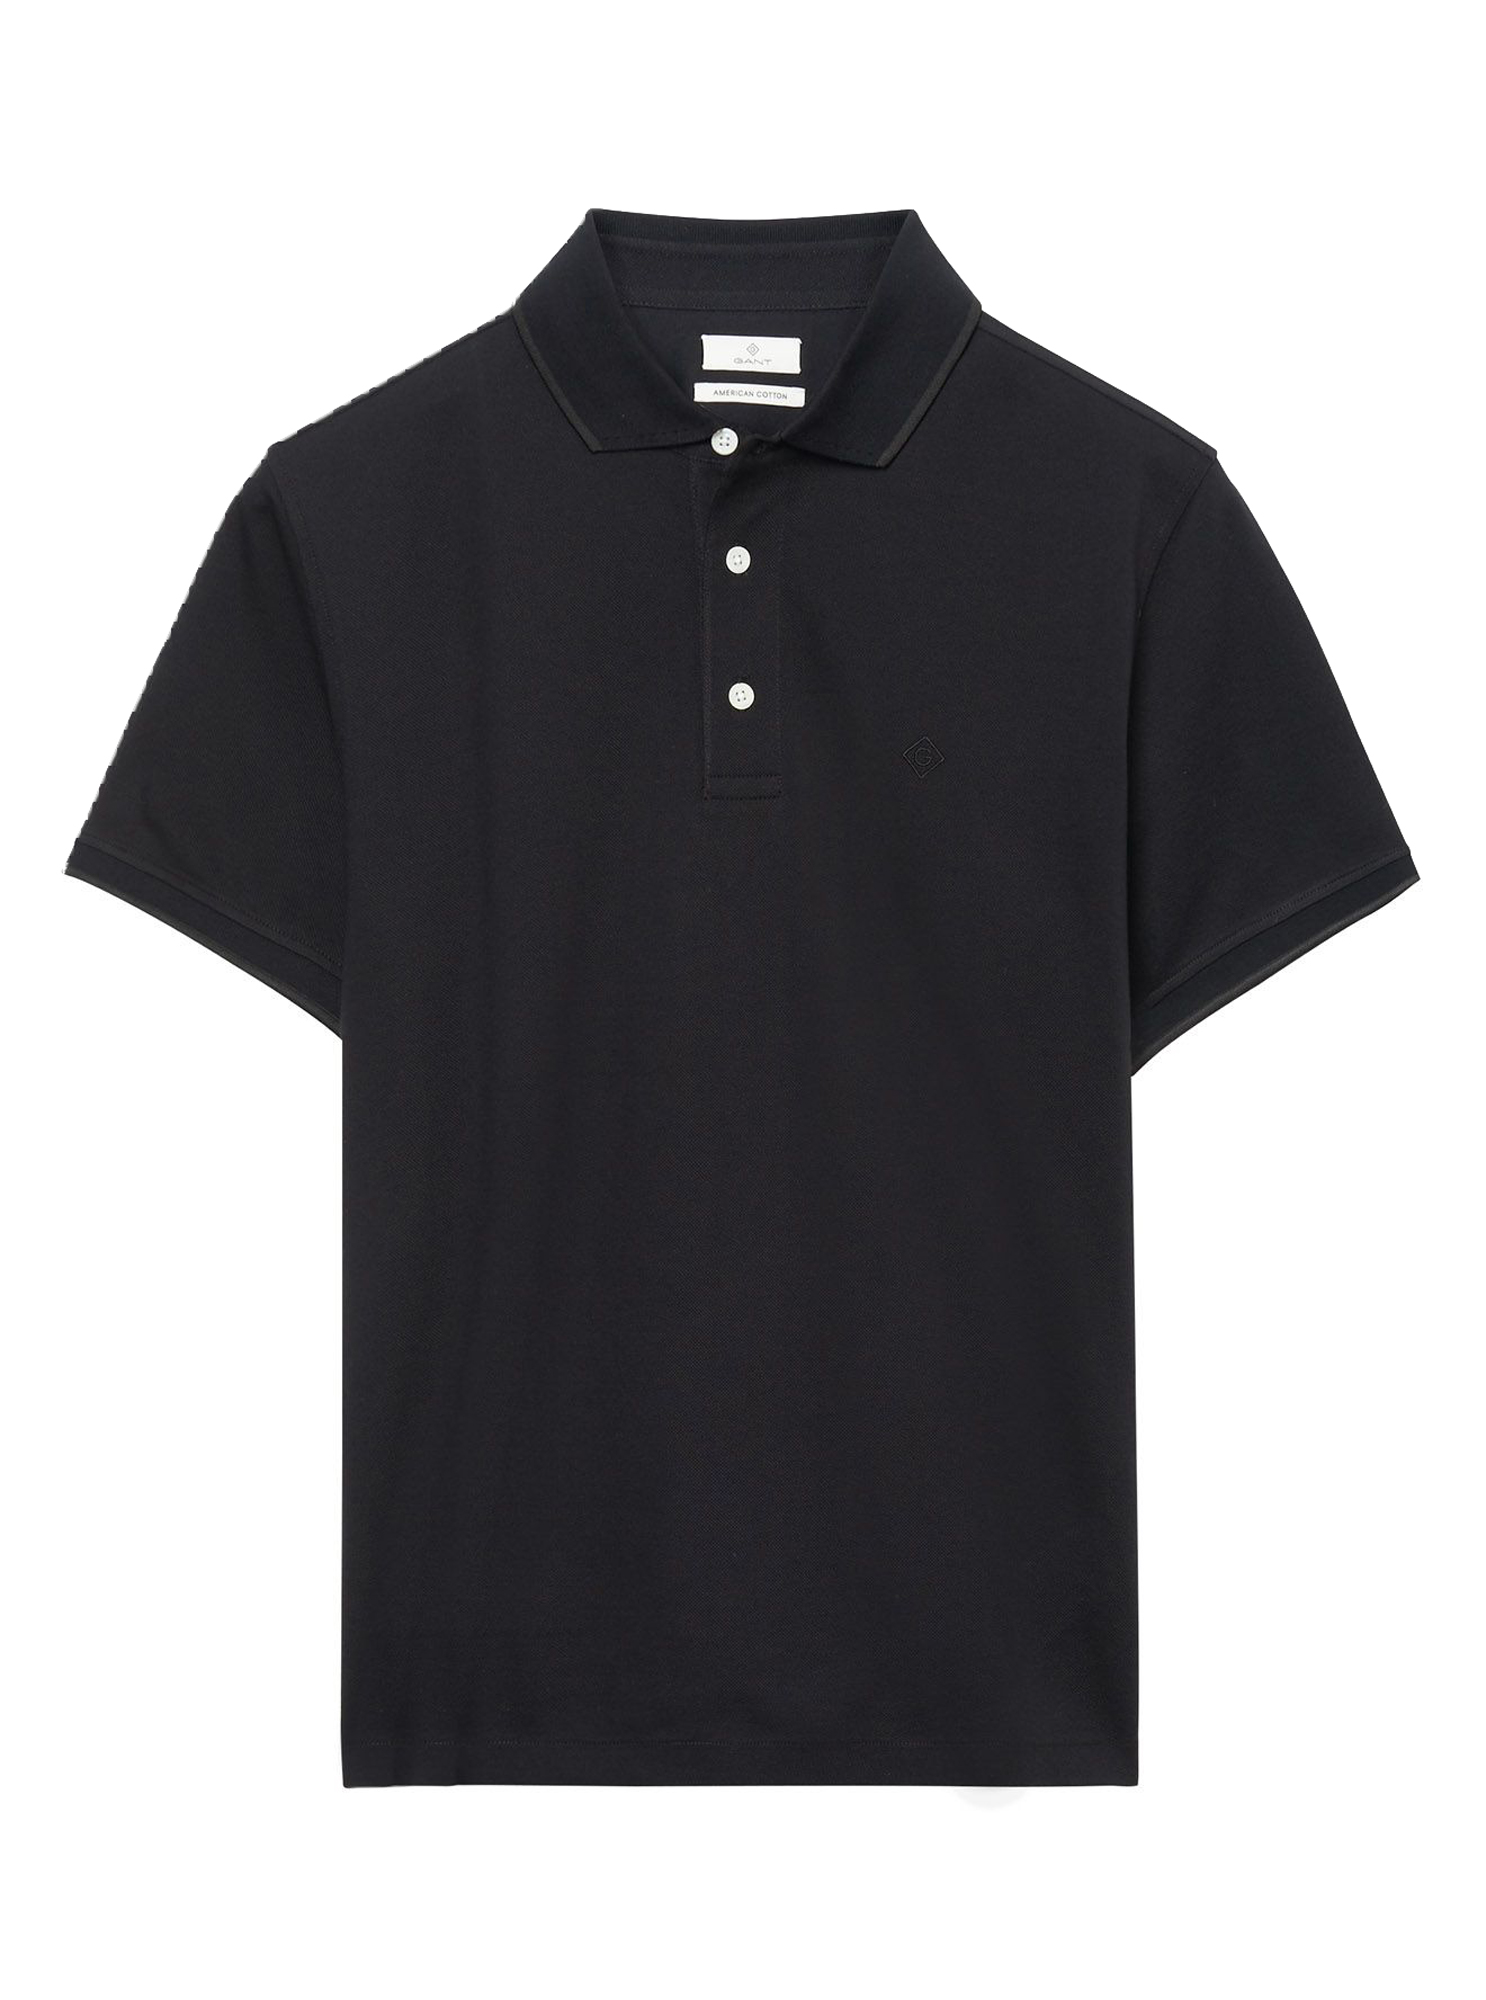 GANT Diamond G Men's Polo Shirt 204338 $115 NWT | eBay